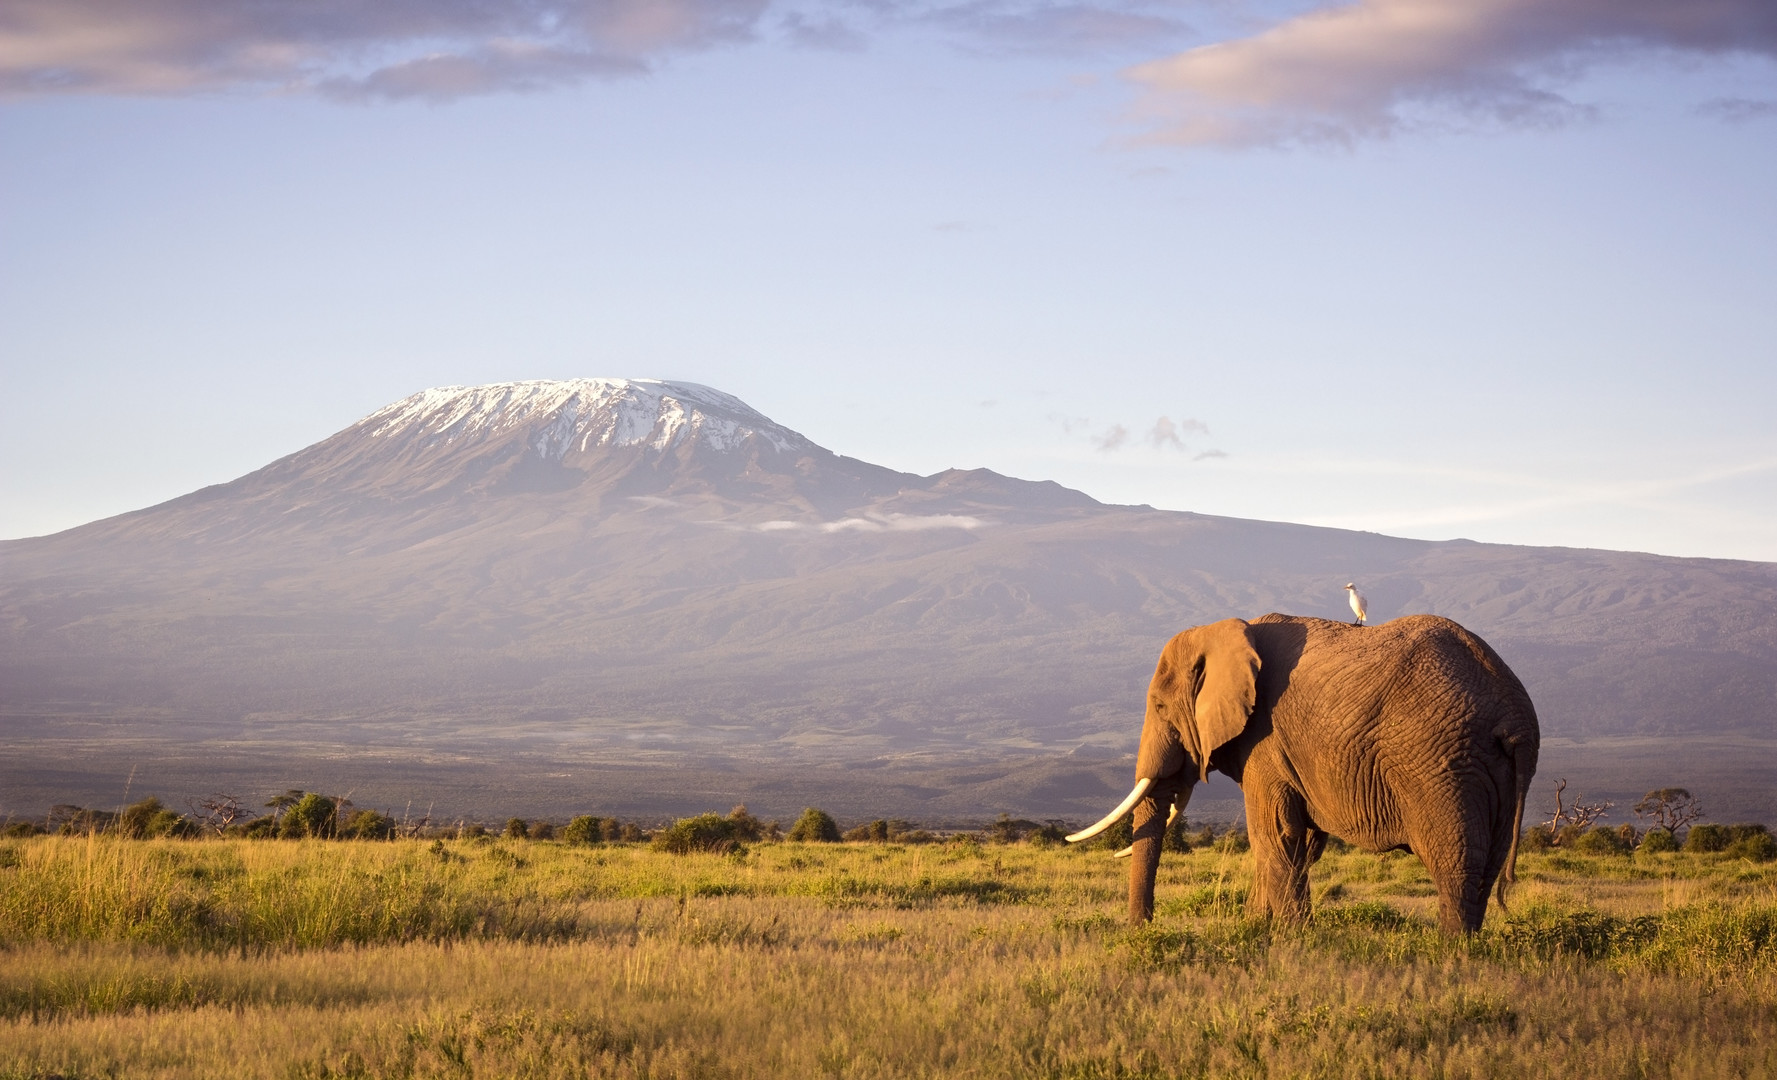 Obrázek hotelu Safari ve stínu Kilimandžára